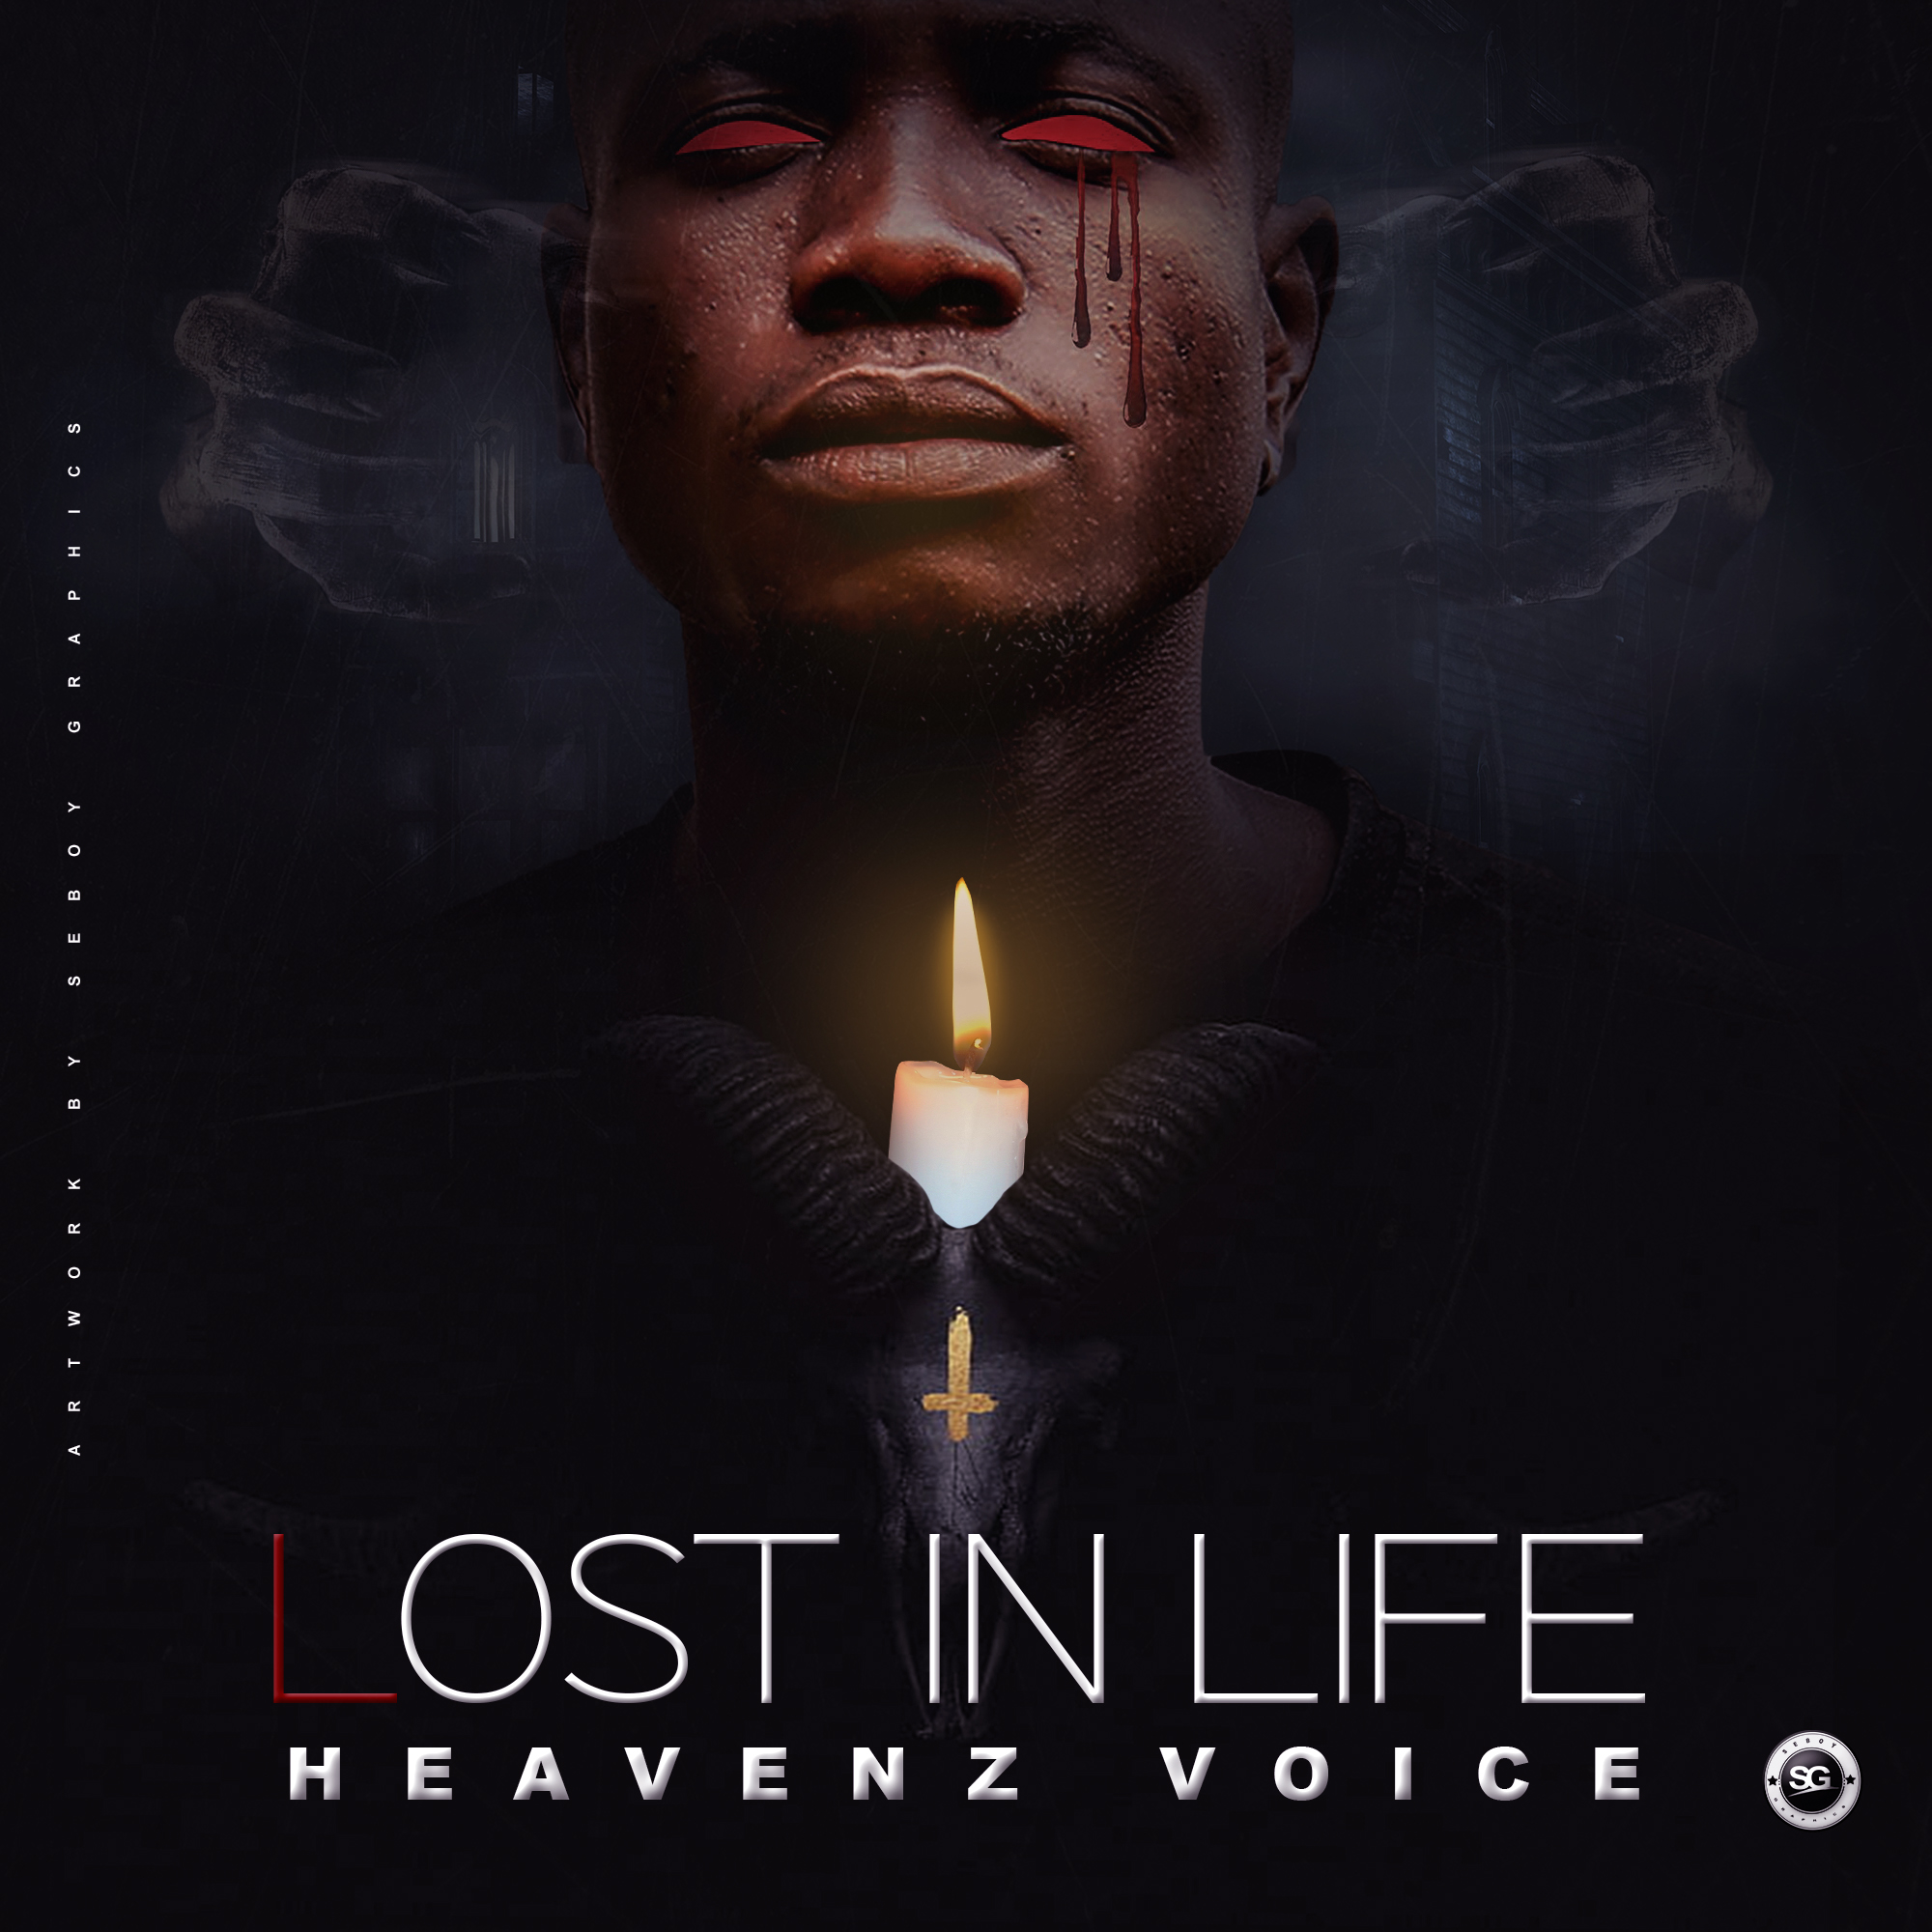 Heavenz Voice - Lost In Life (Prod By Zed Kay)